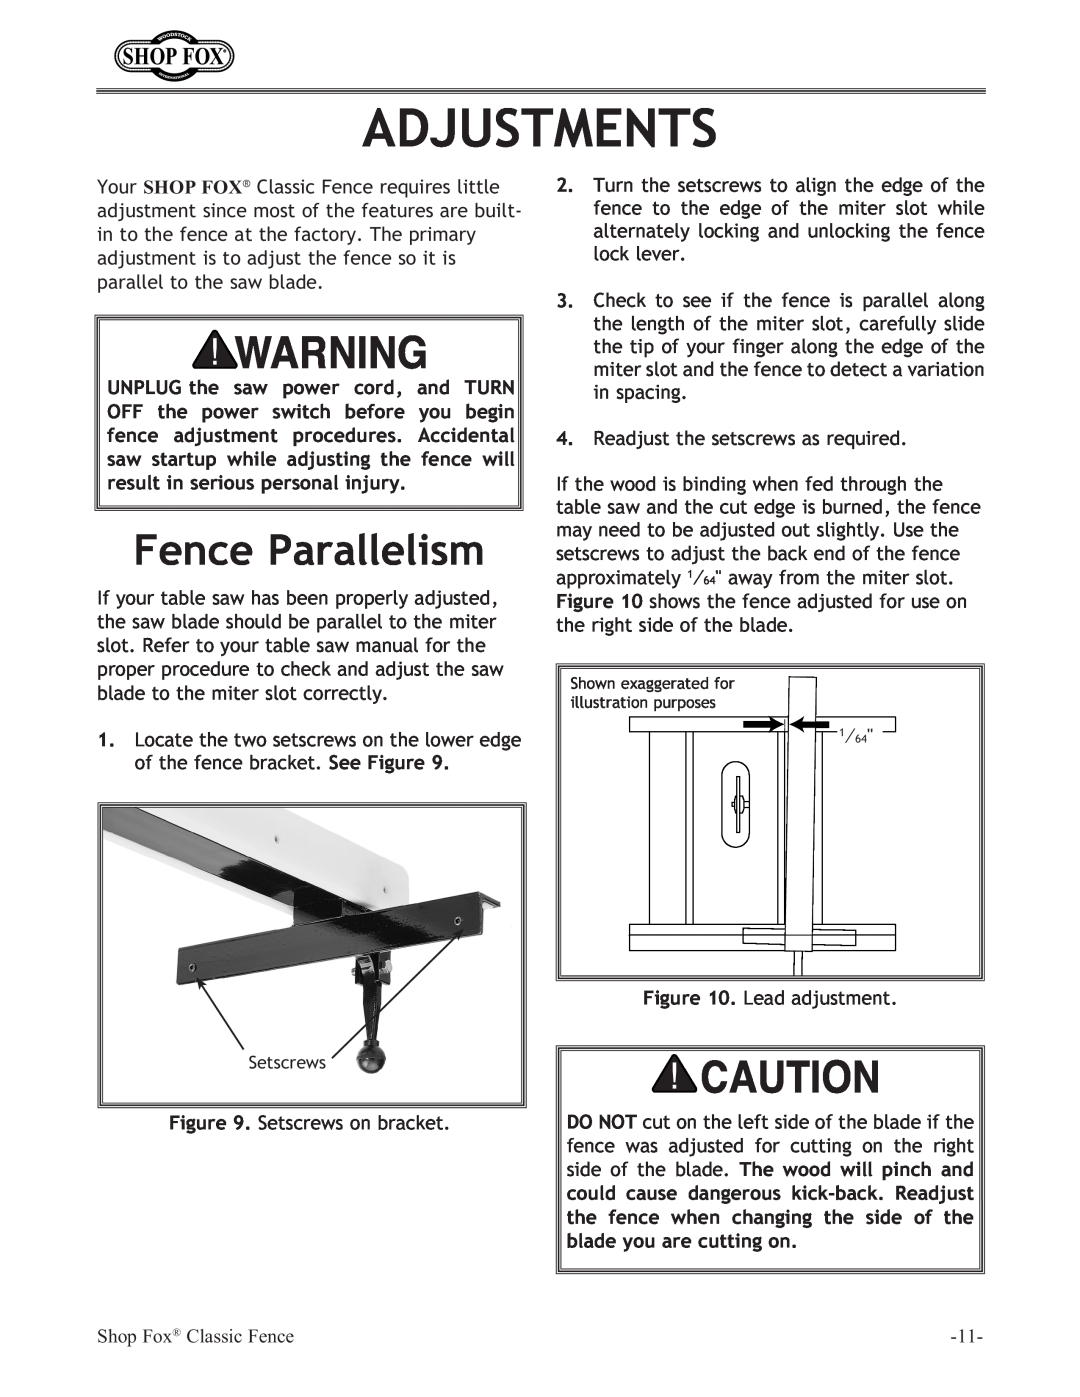 Woodstock W2005 instruction manual Adjustments, Fence Parallelism 